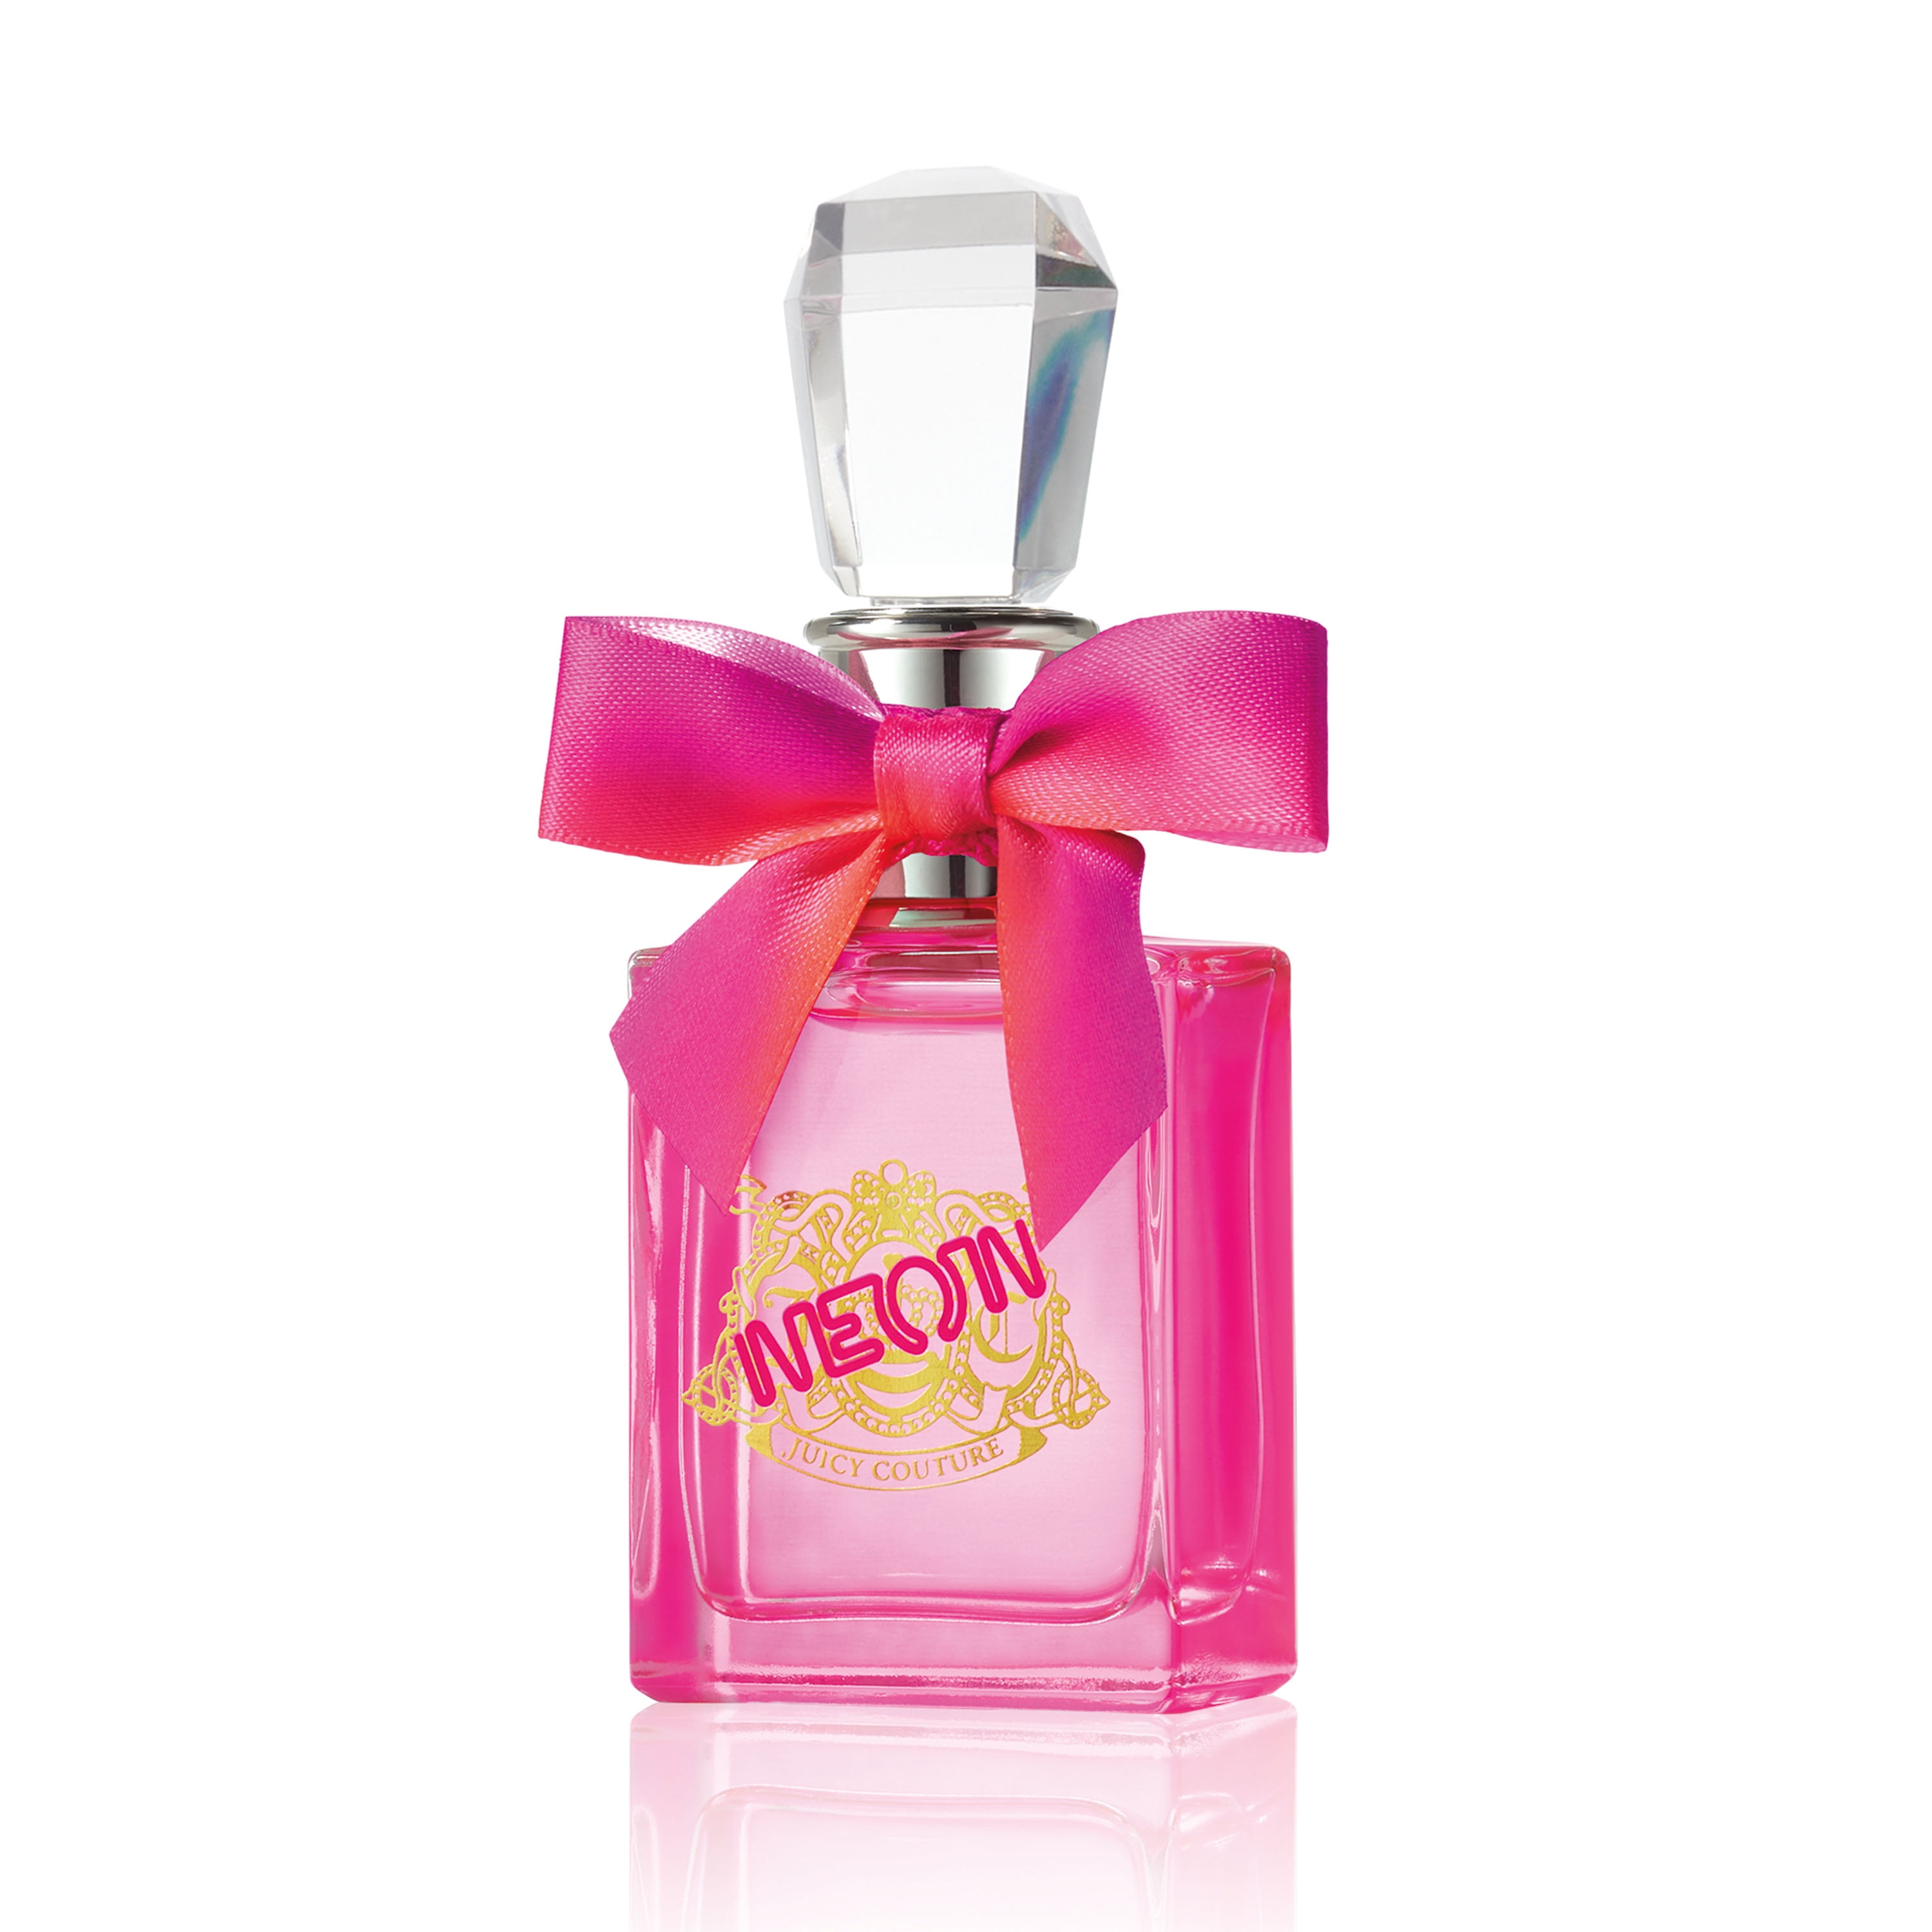 Juicy Couture Viva La Juicy Neon, Perfume for Women, 1.0 oz